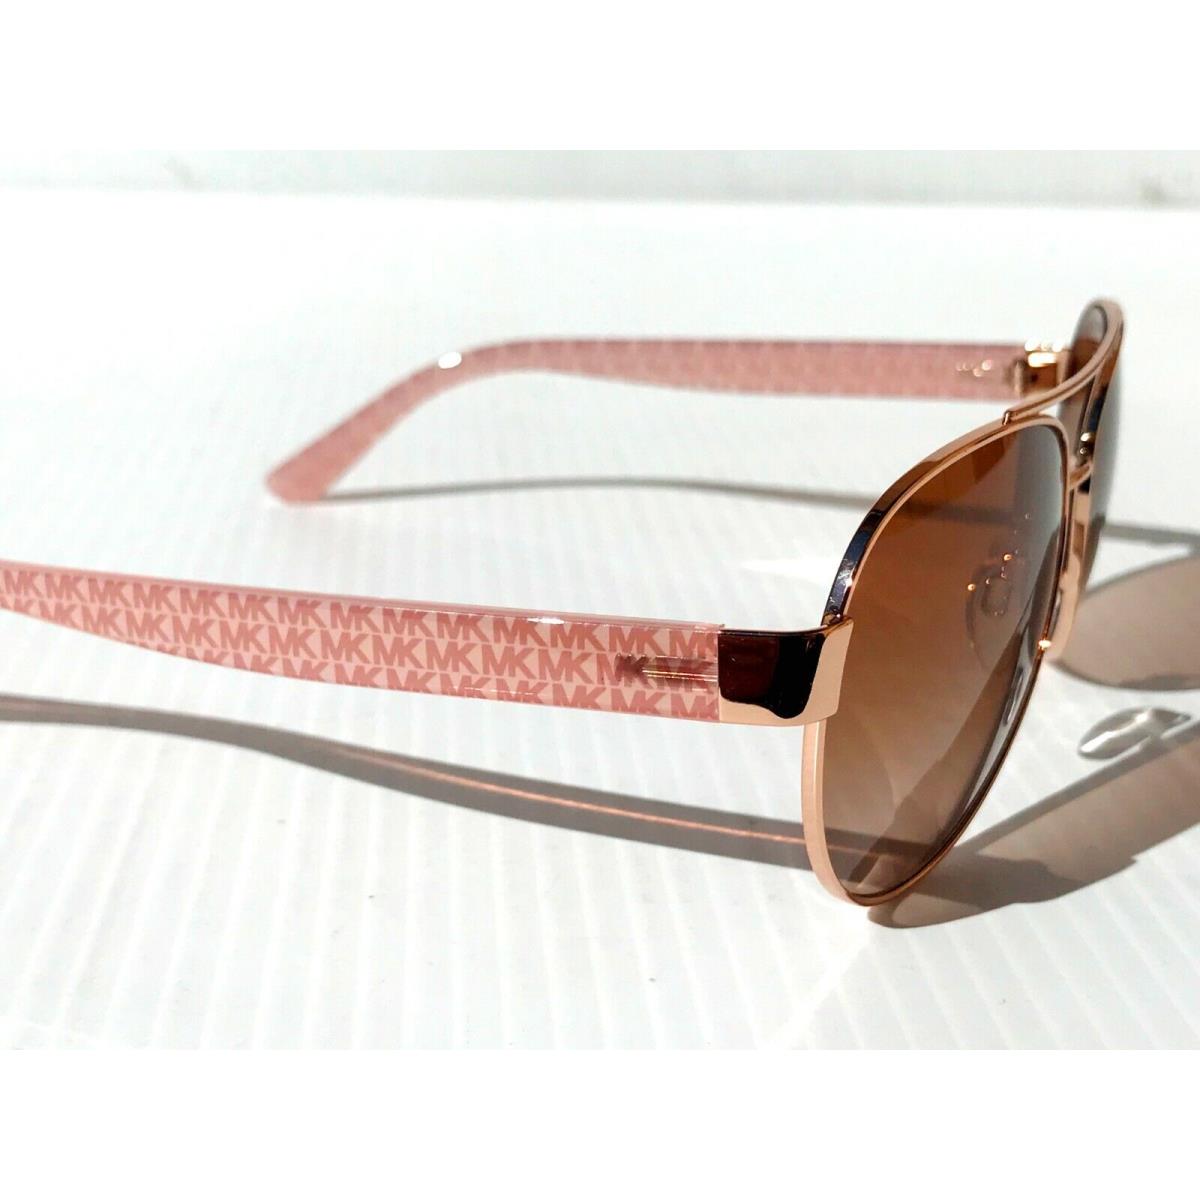 Michael Kors Blair 58mm Aviator Pink Rose Gold w Brown Gradient MK1014  Sunglass - Michael Kors sunglasses - 018211608120 | Fash Brands